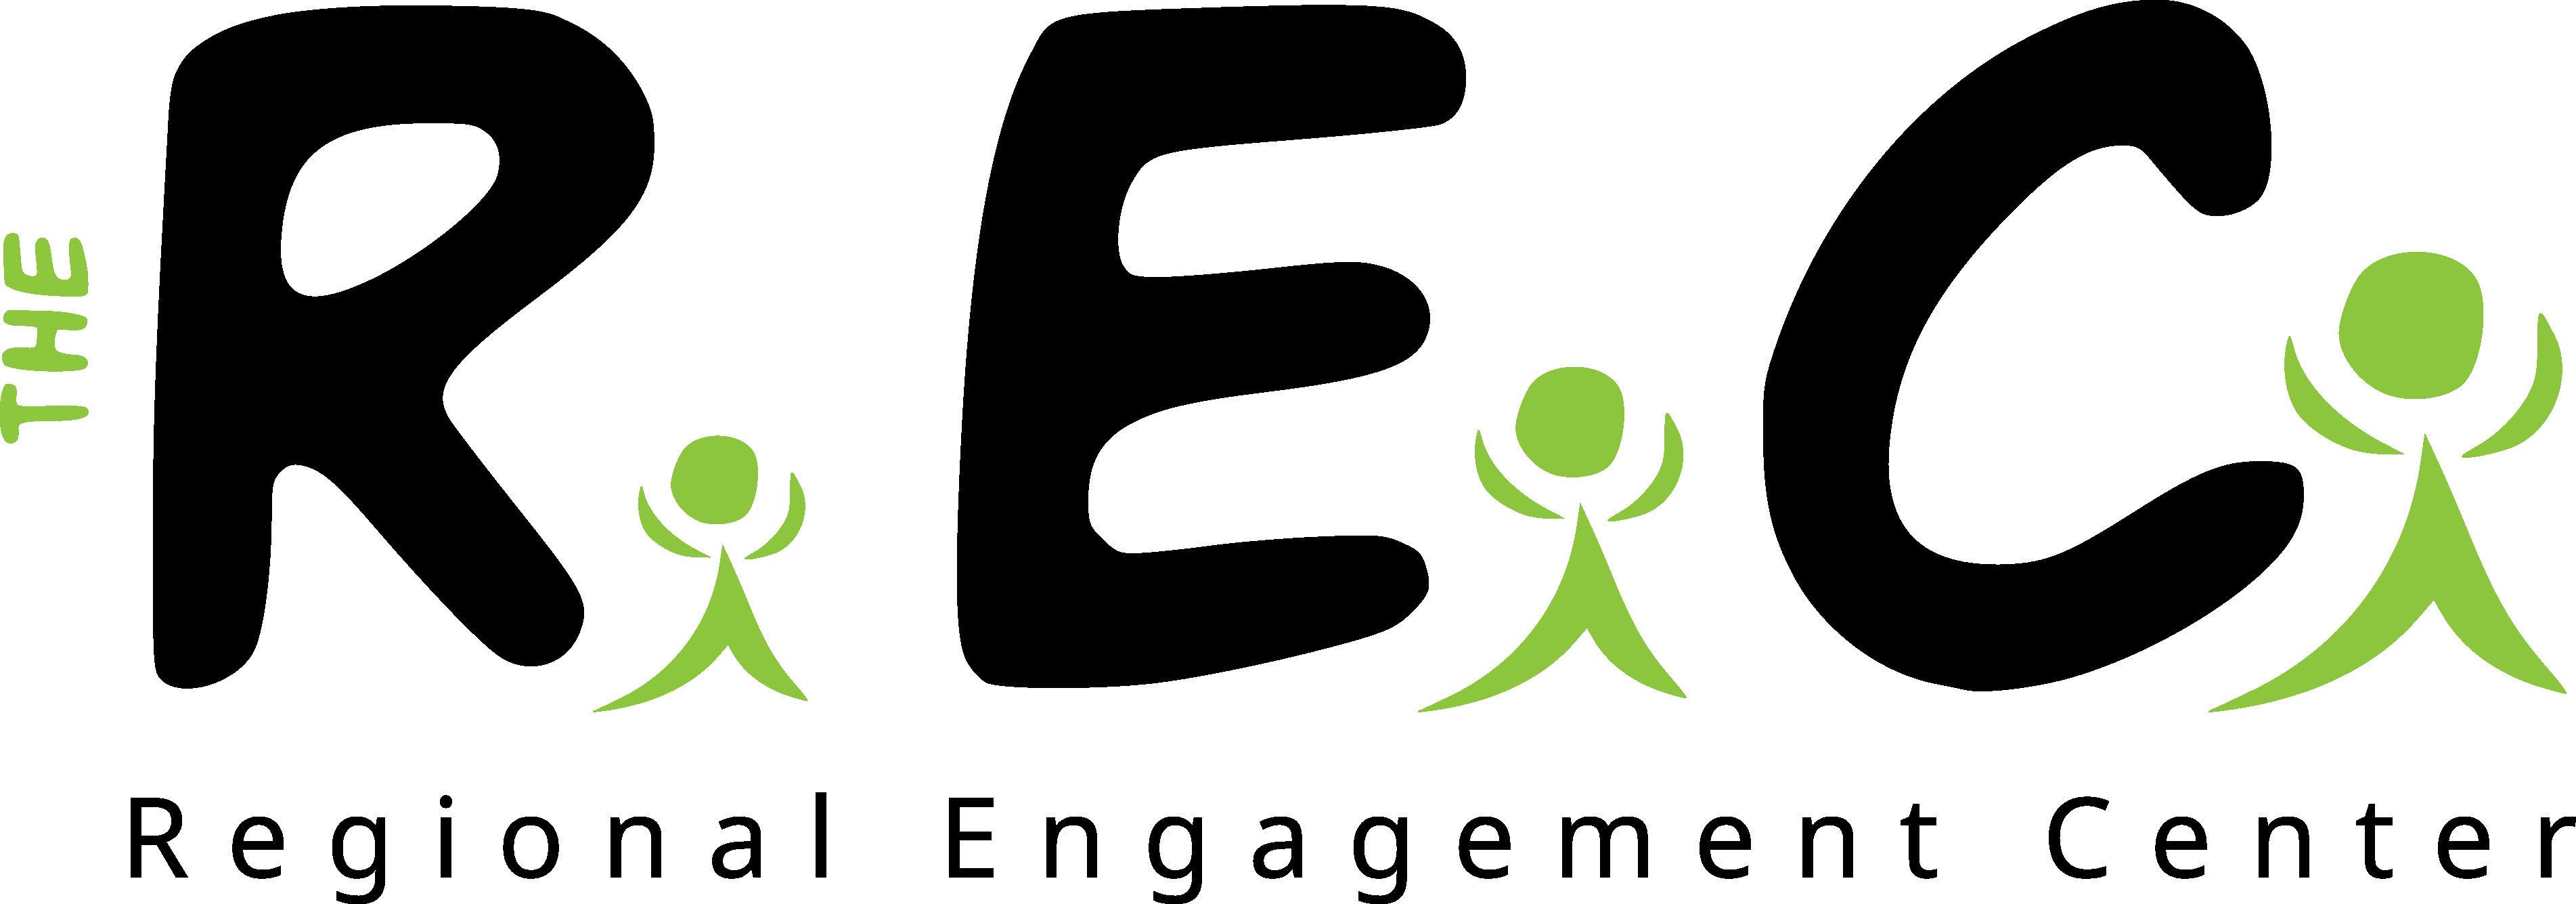 Regional Engagement Center logo